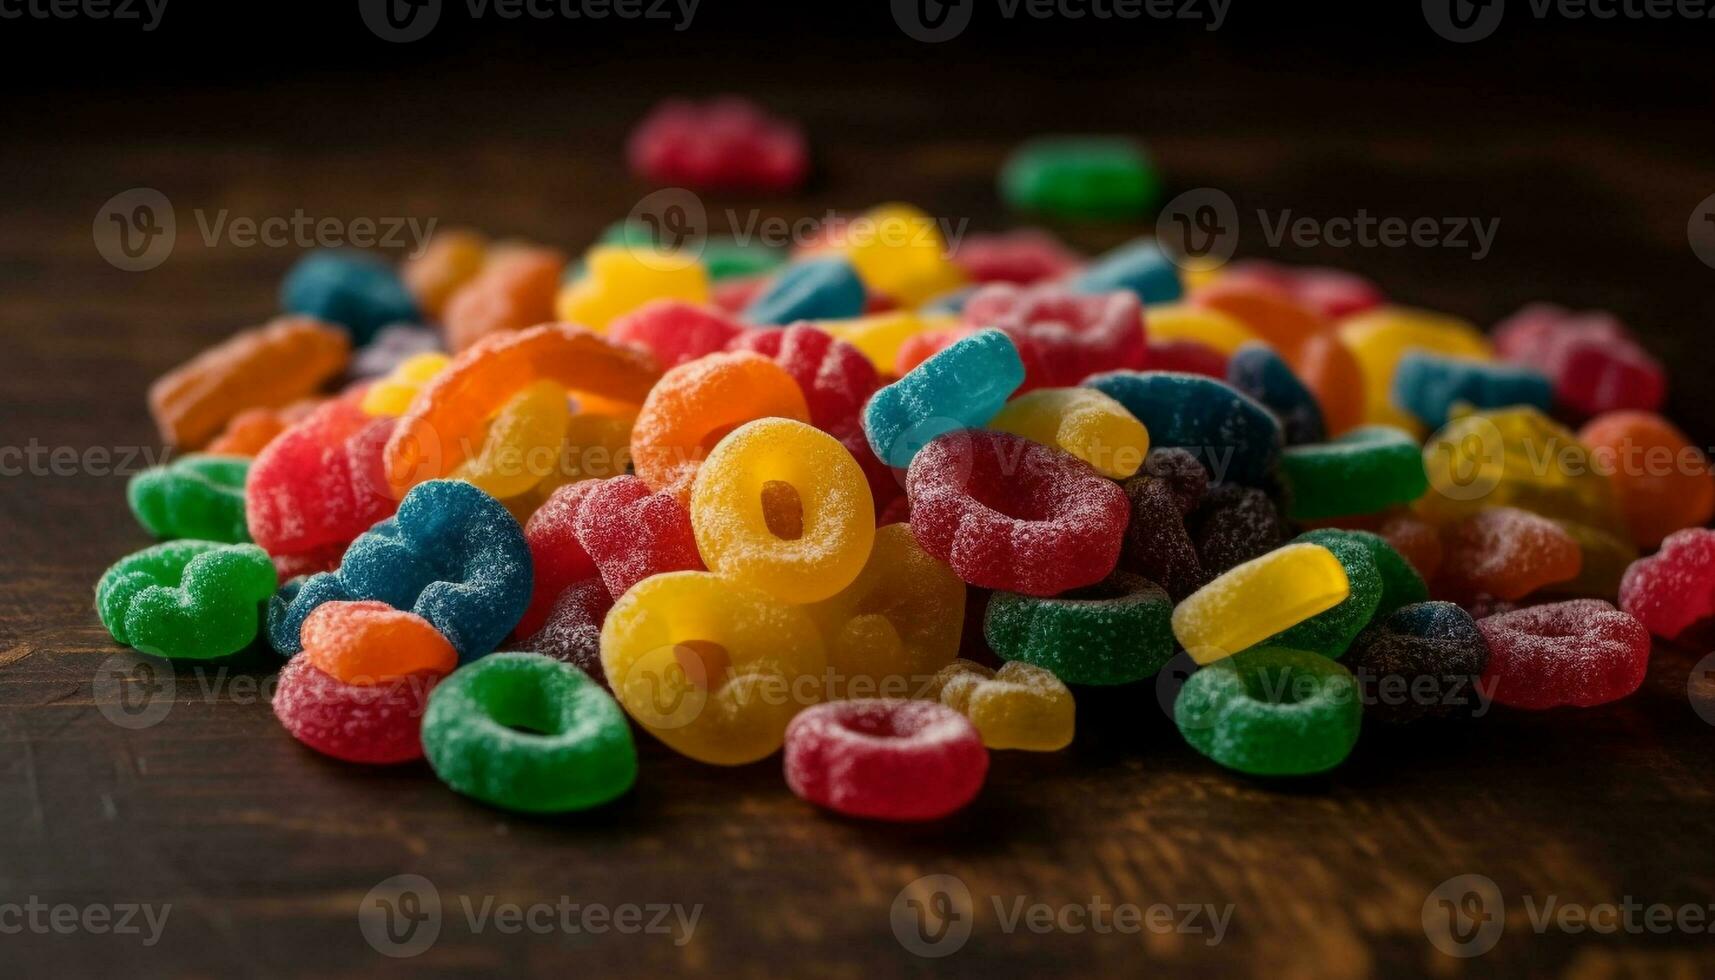 Abundance of colorful sweets, childhood indulgence fun generated by AI photo